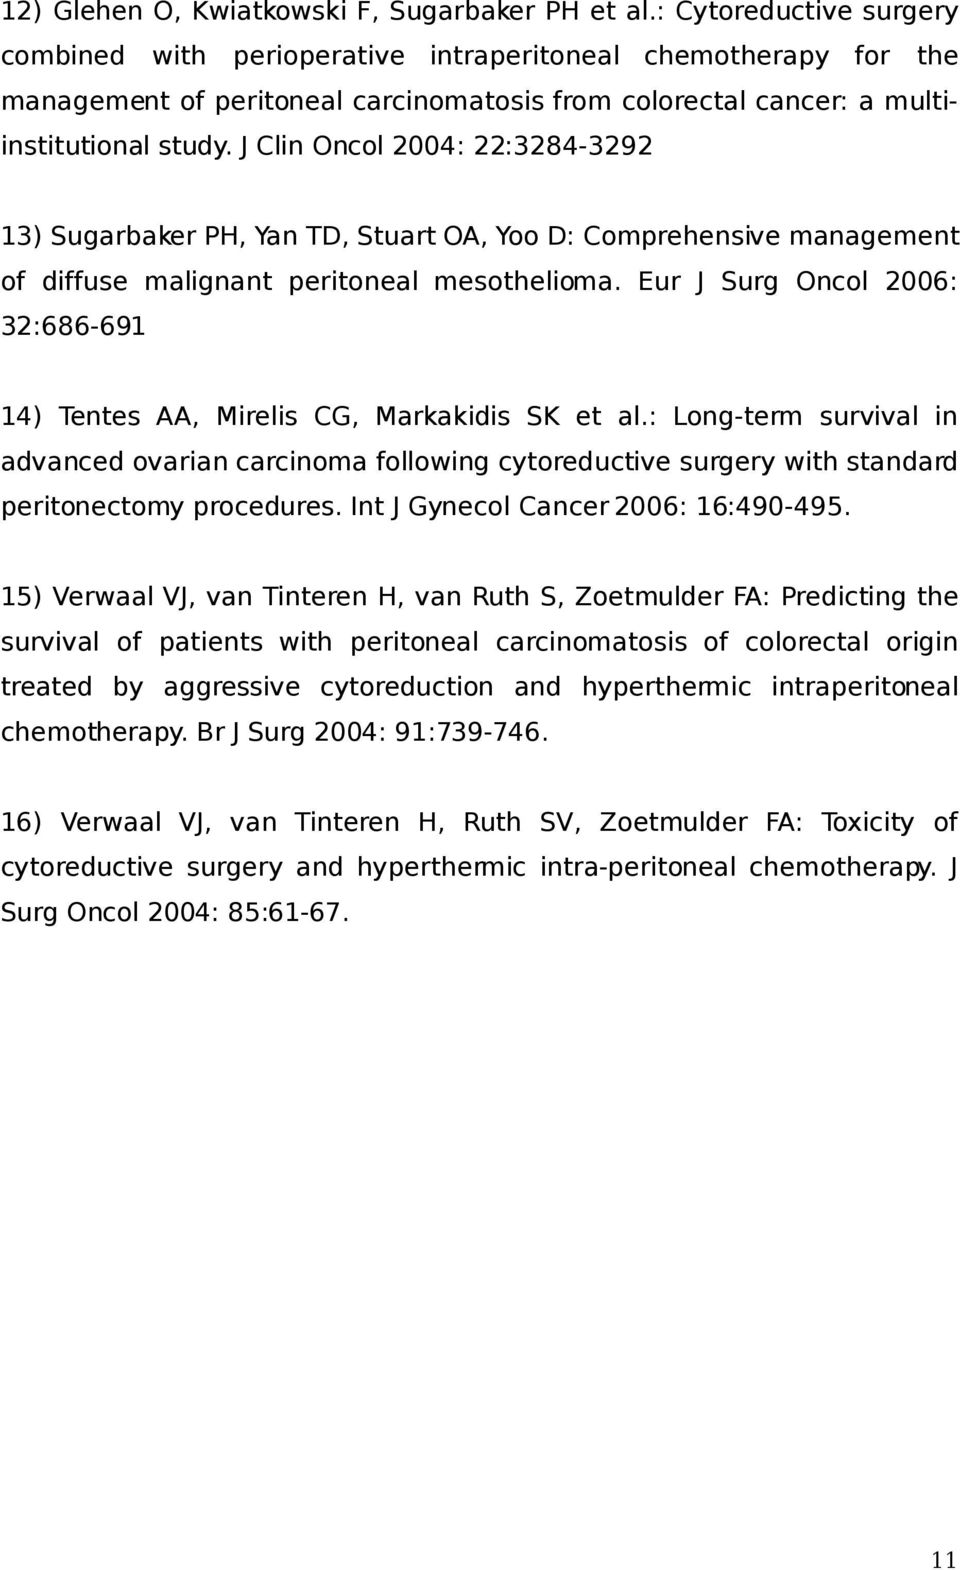 J Clin Oncol 2004: 22:3284-3292 13) Sugarbaker PH, Yan TD, Stuart OA, Yoo D: Comprehensive management of diffuse malignant peritoneal mesothelioma.